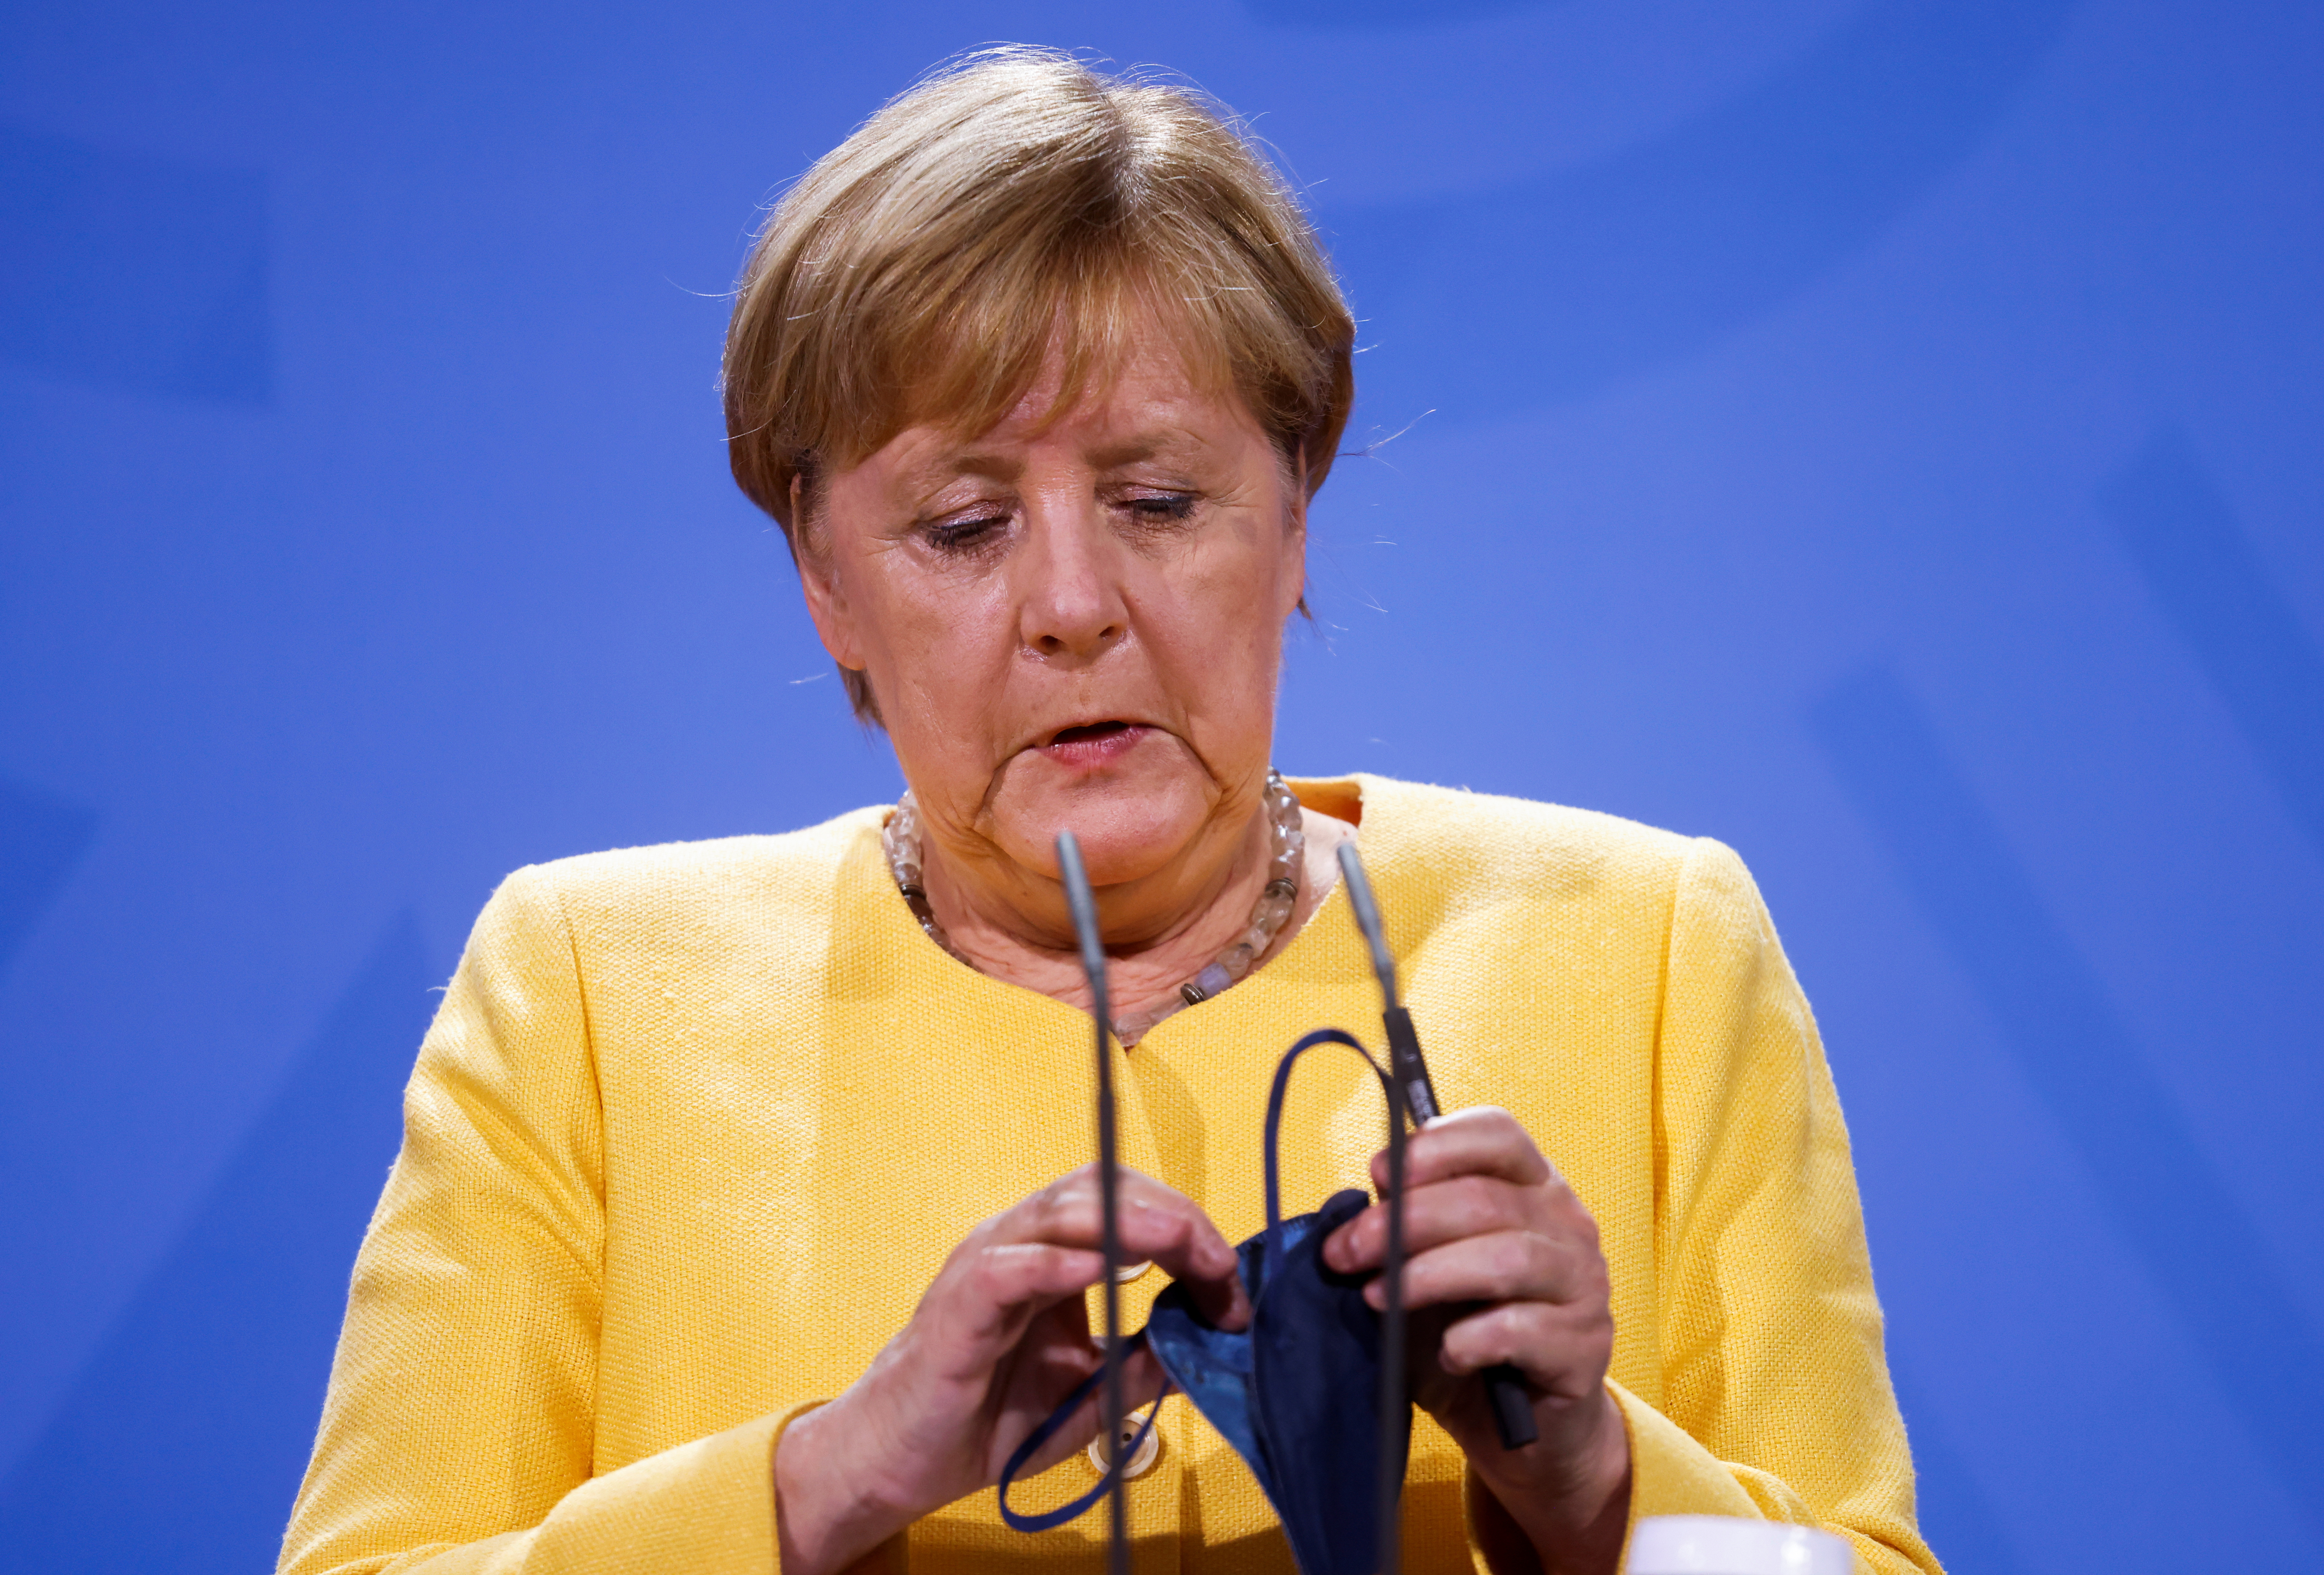 German Chancellor Angela Merkel speaks during a news conference in Berlin